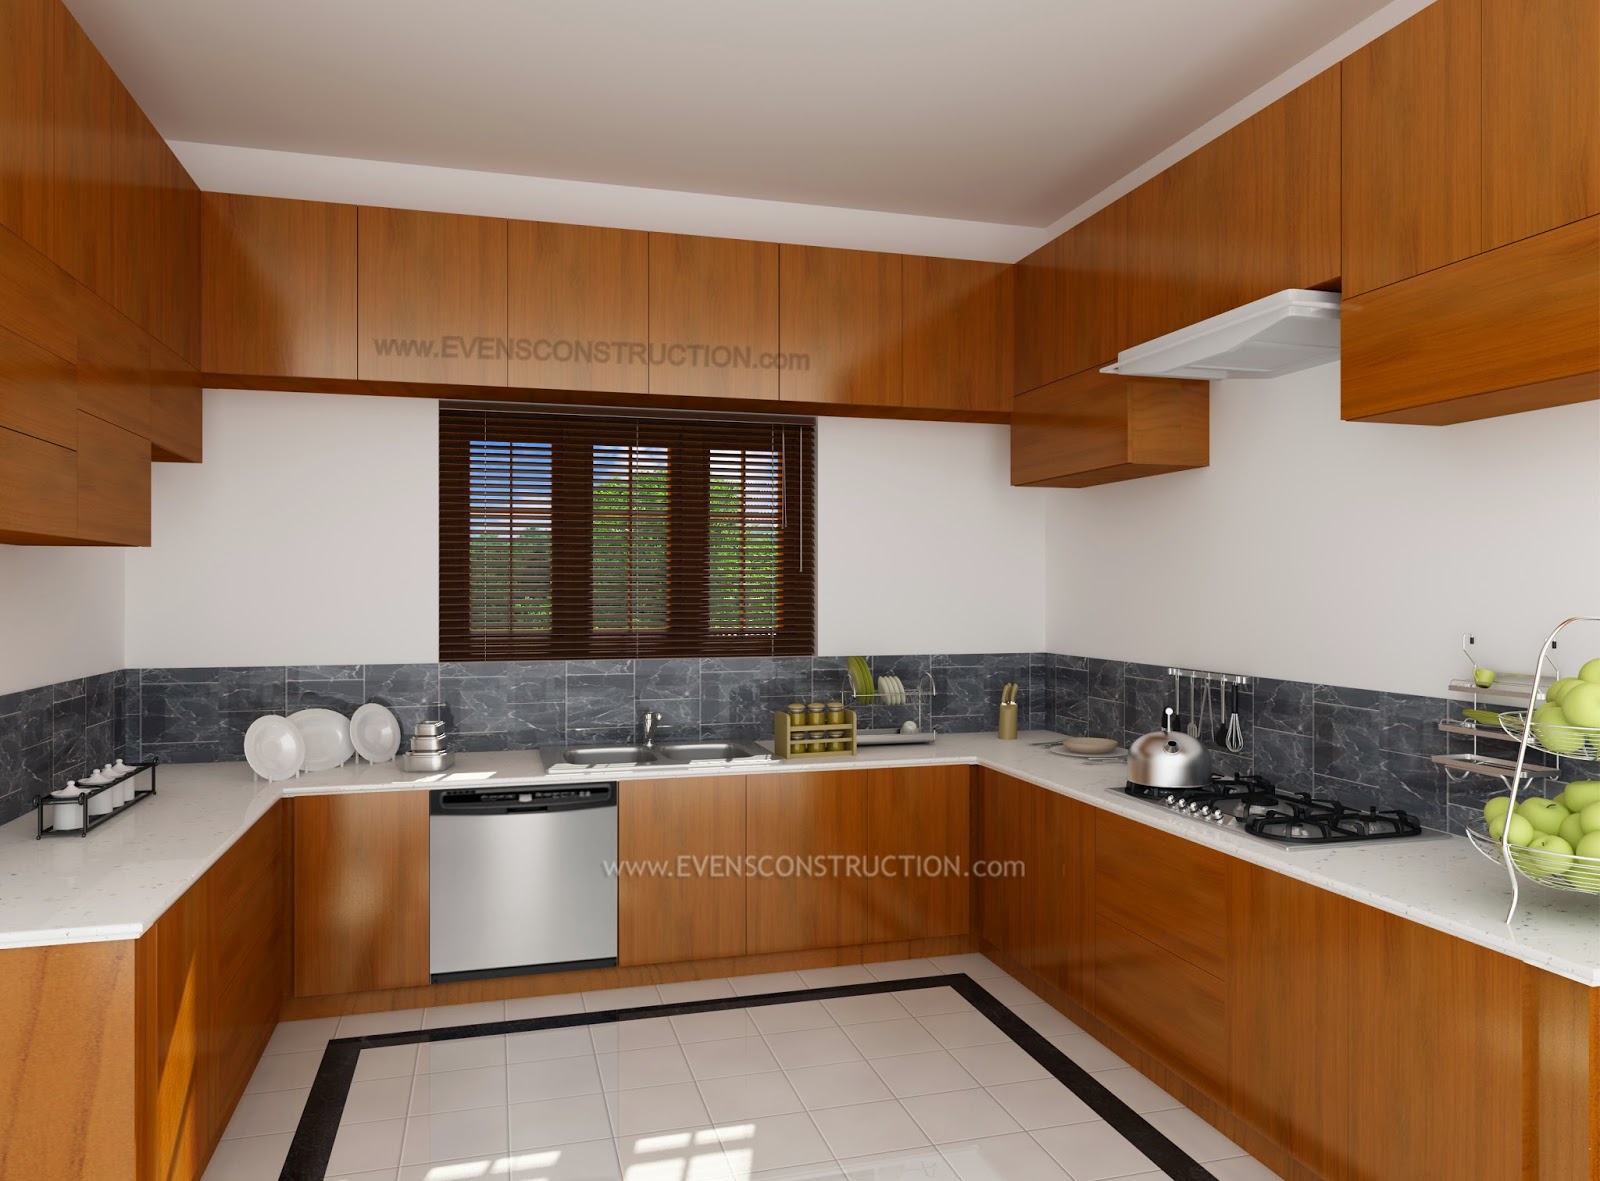 Kitchen Design Kerala / Small Kitchen Design Modern Designs In Kerala